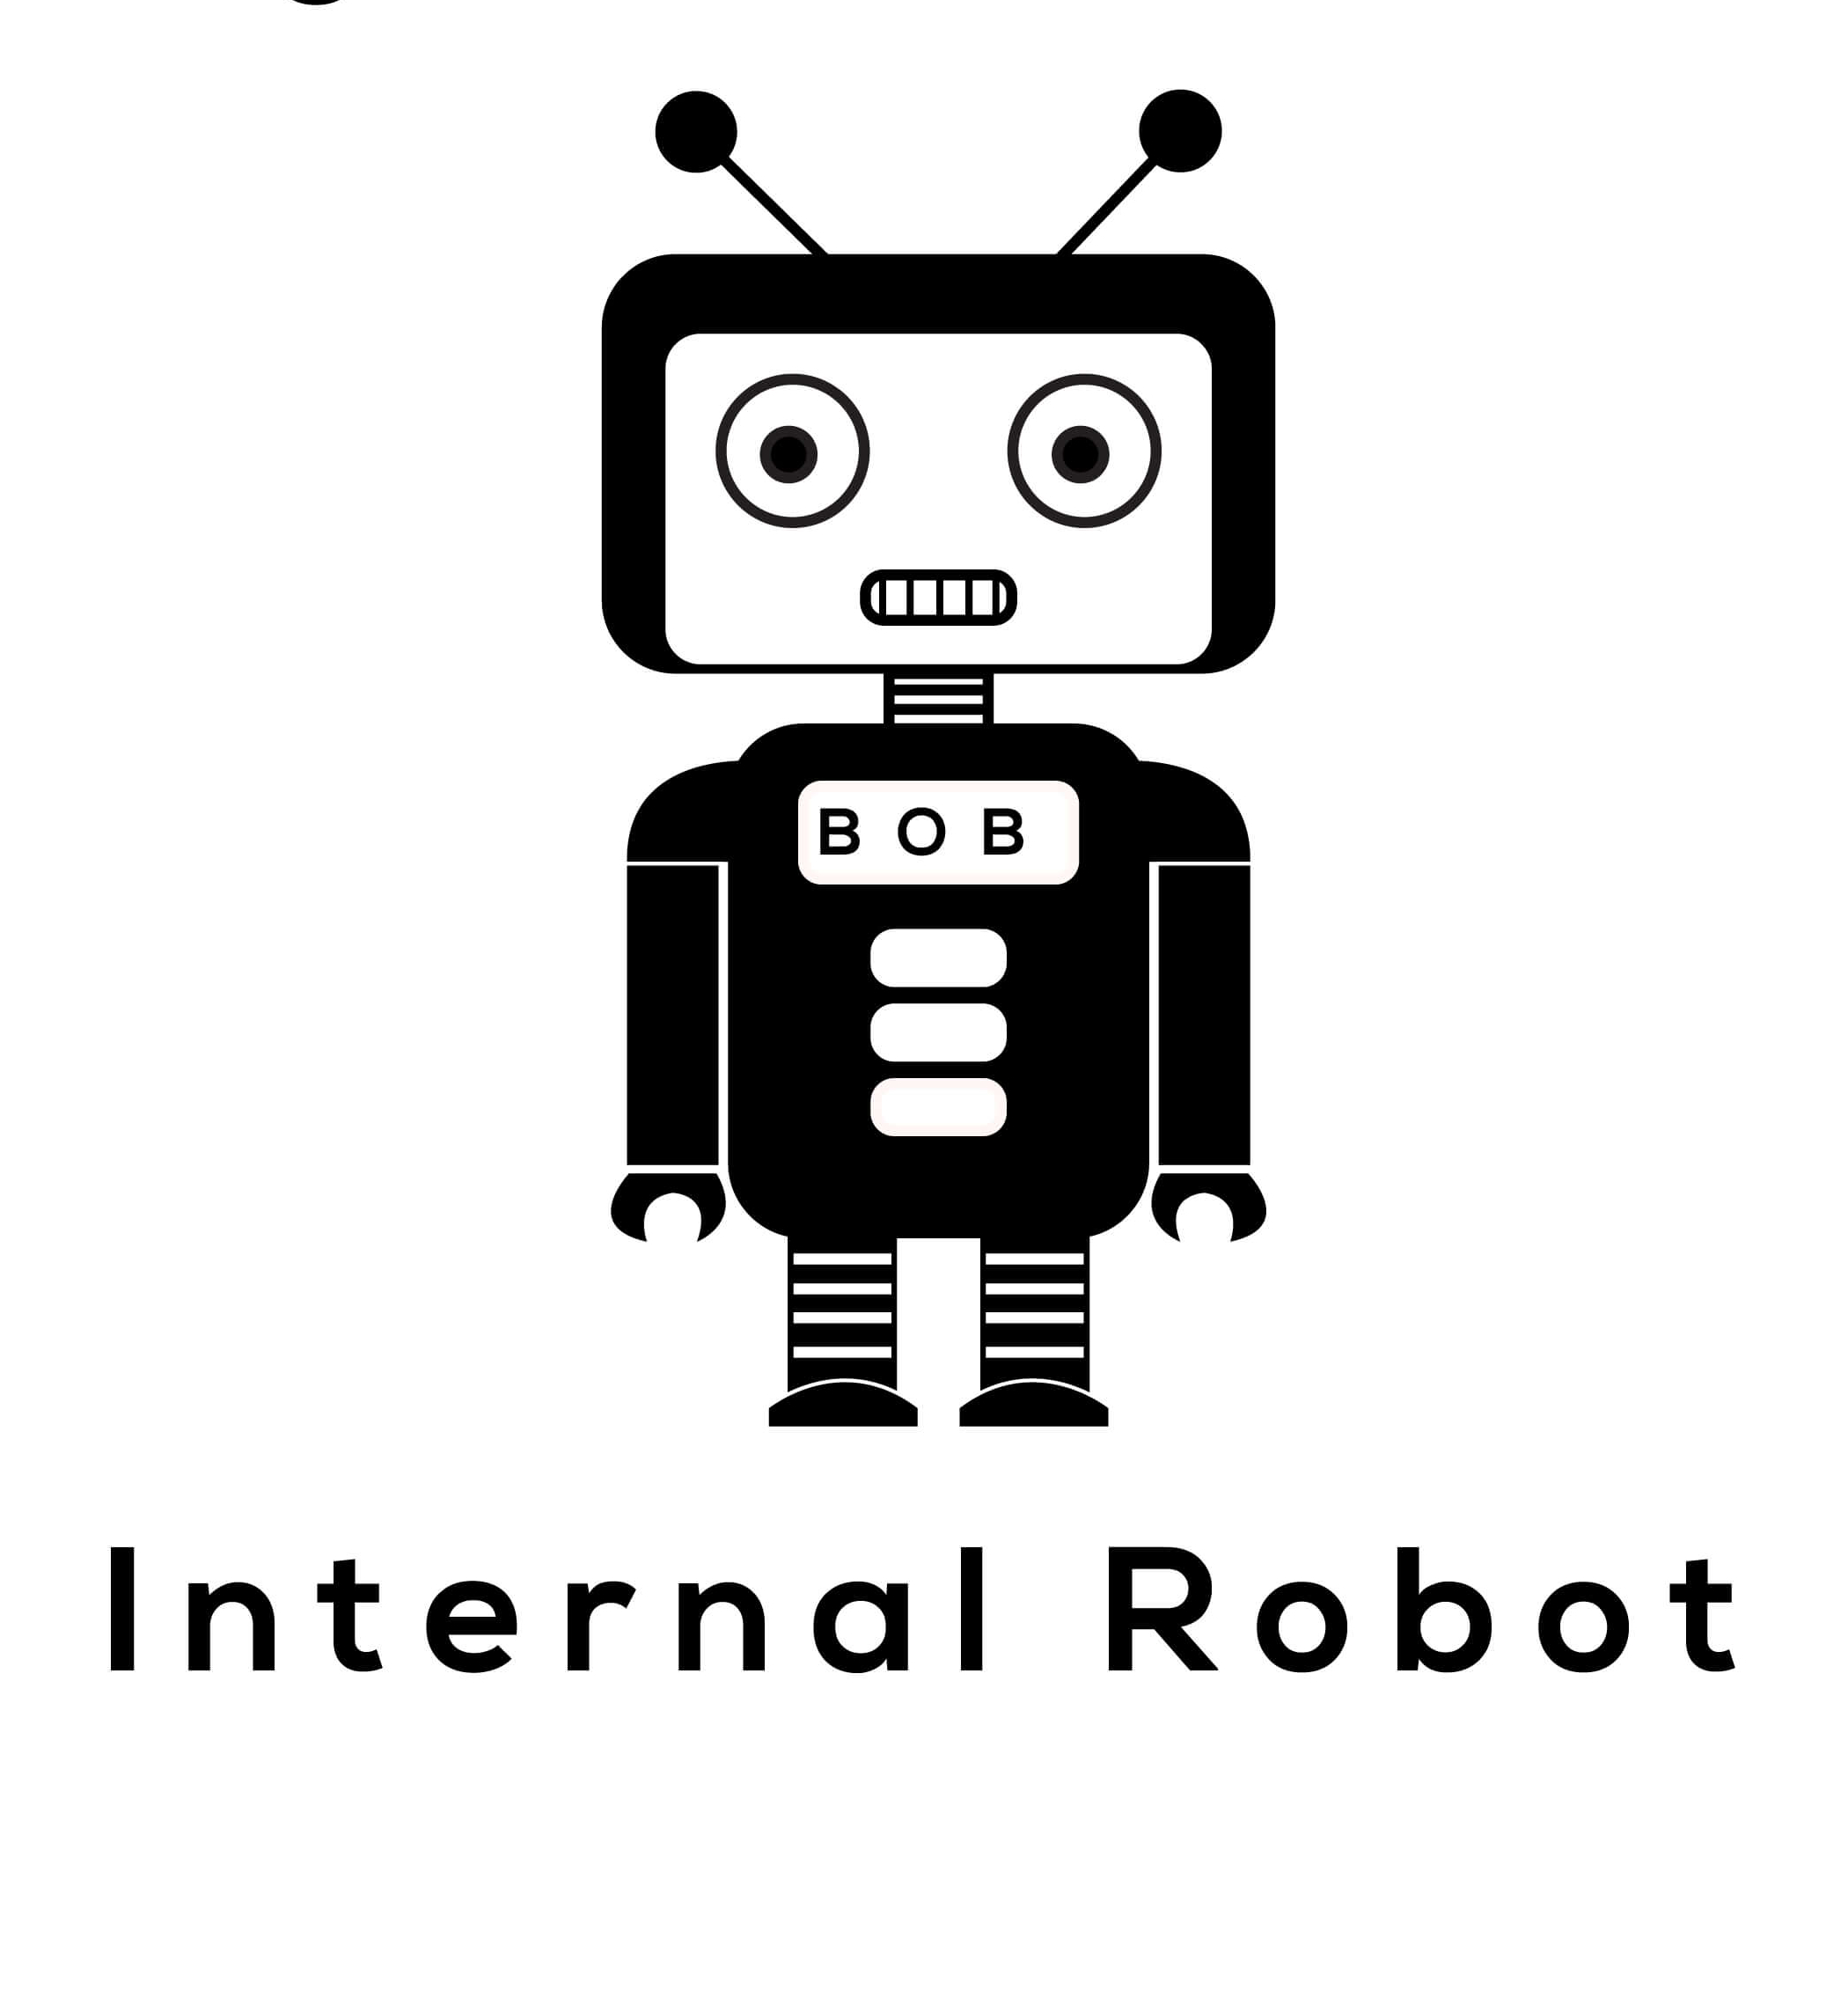 Bob the internal robot